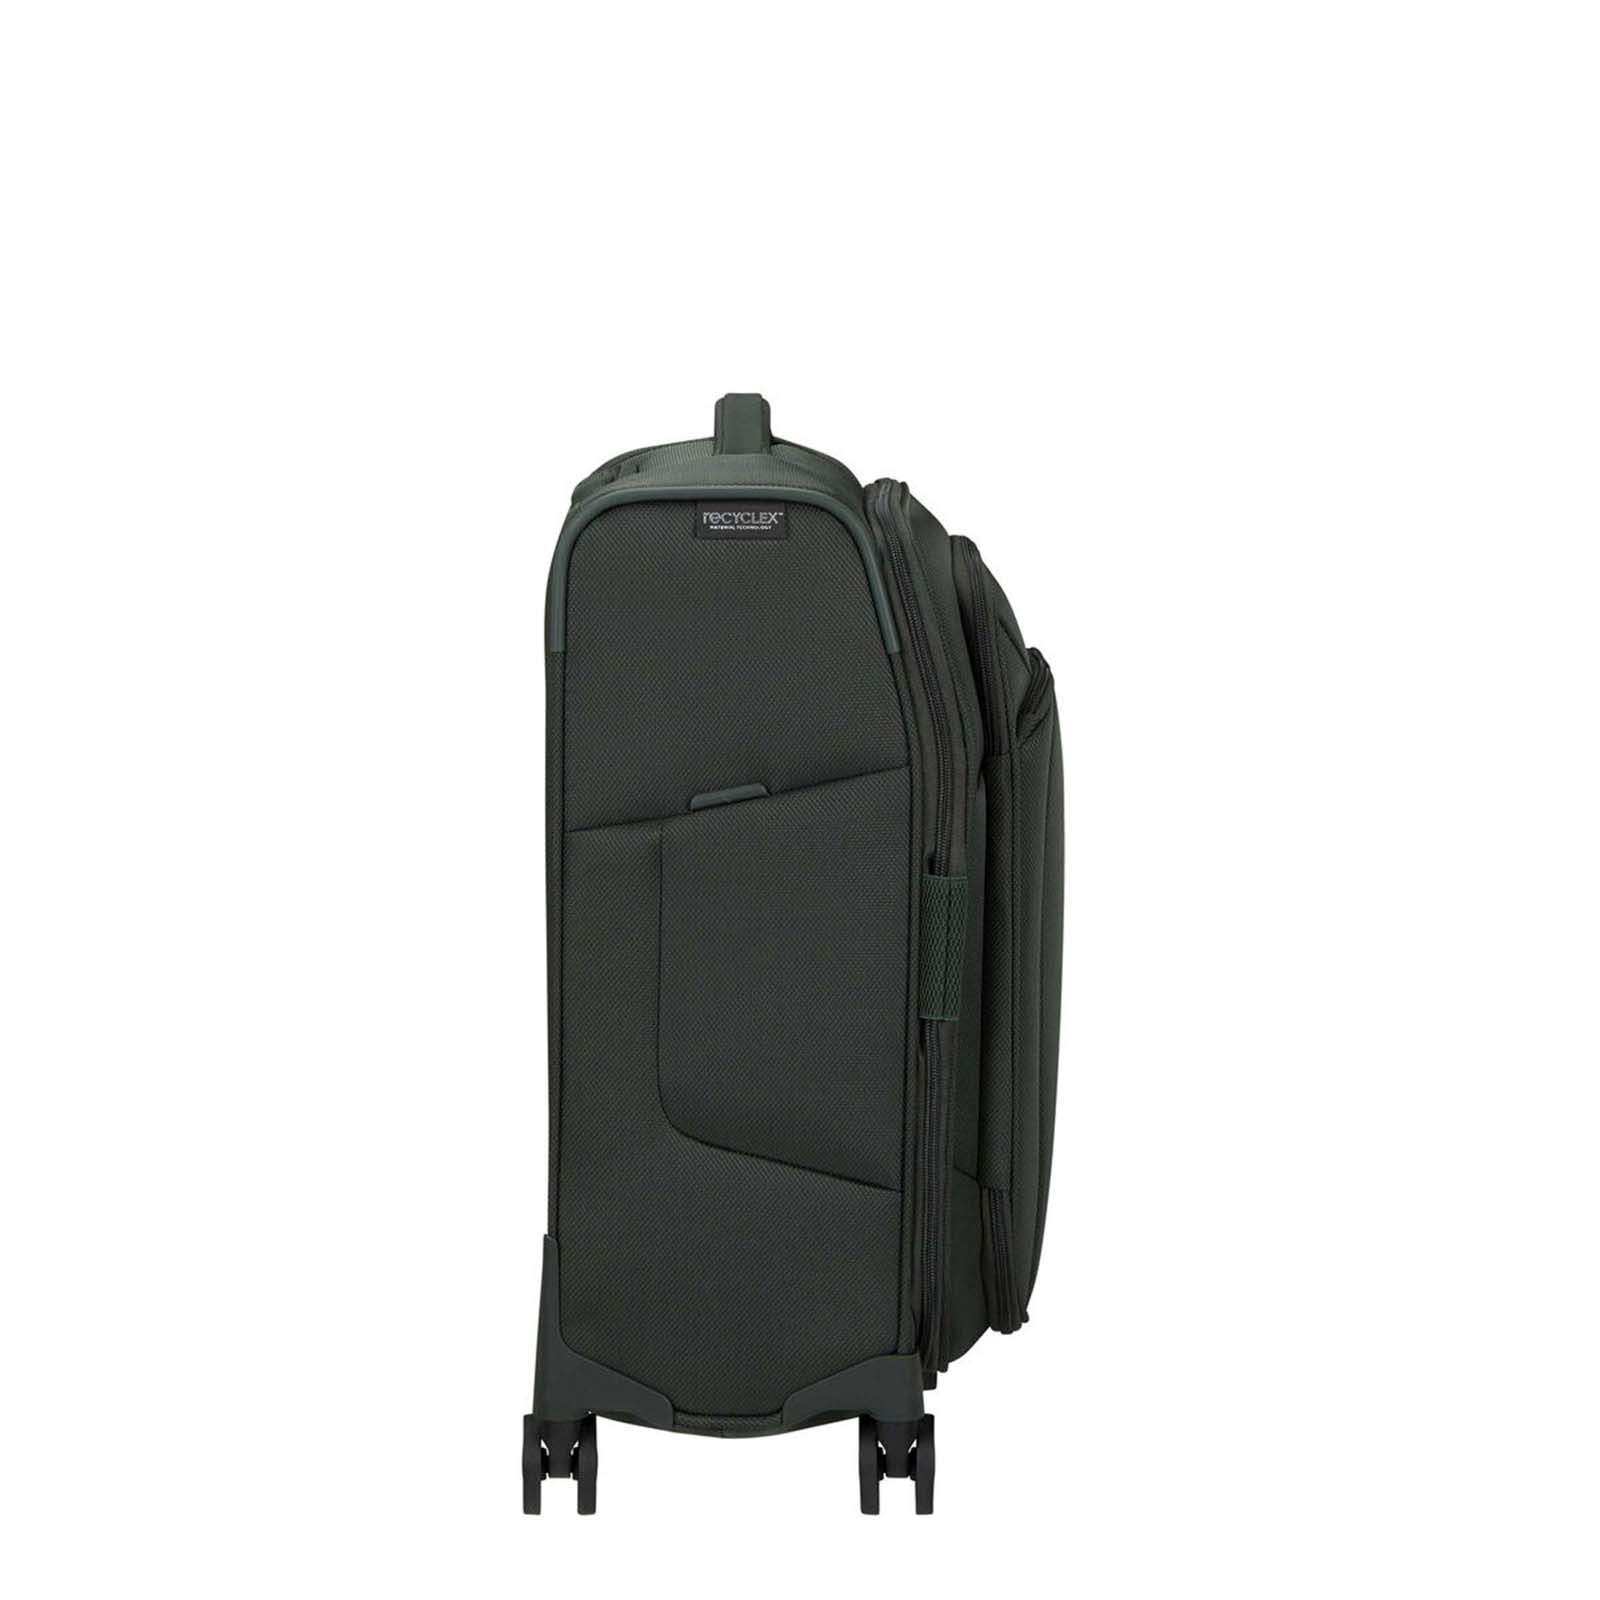 Samsonite-Respark-55cm-Carry-On-Suitcase-Forest-Green-Side